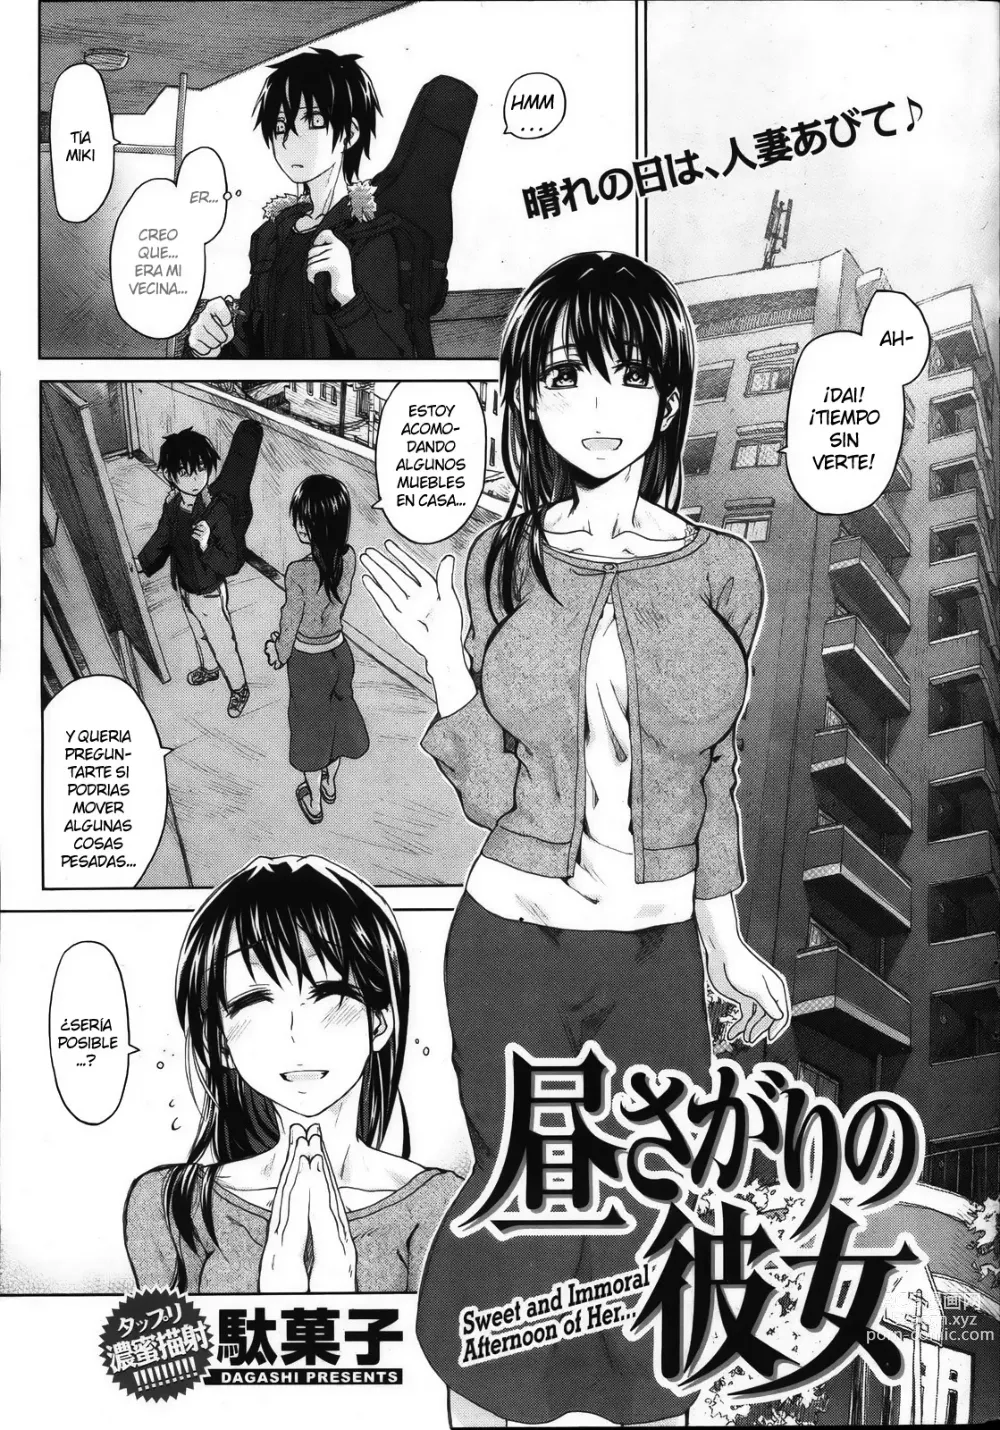 Page 1 of manga Hirusagari no Kanojo - Sweet and Immoral Afternoon of Her...